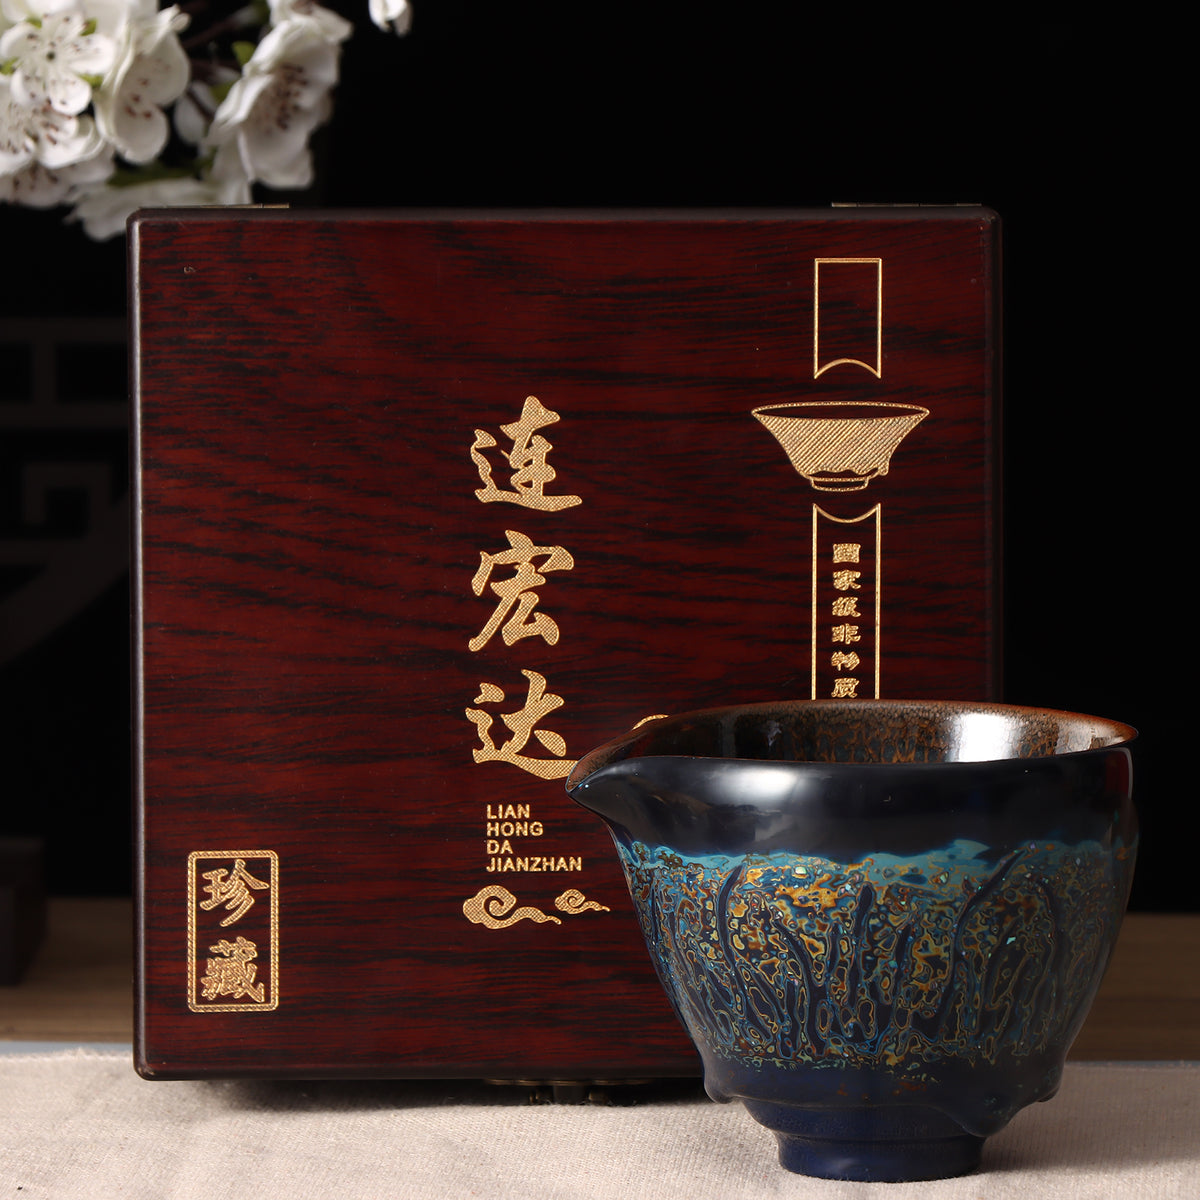 Lian Hongda Daqi Sharing cup